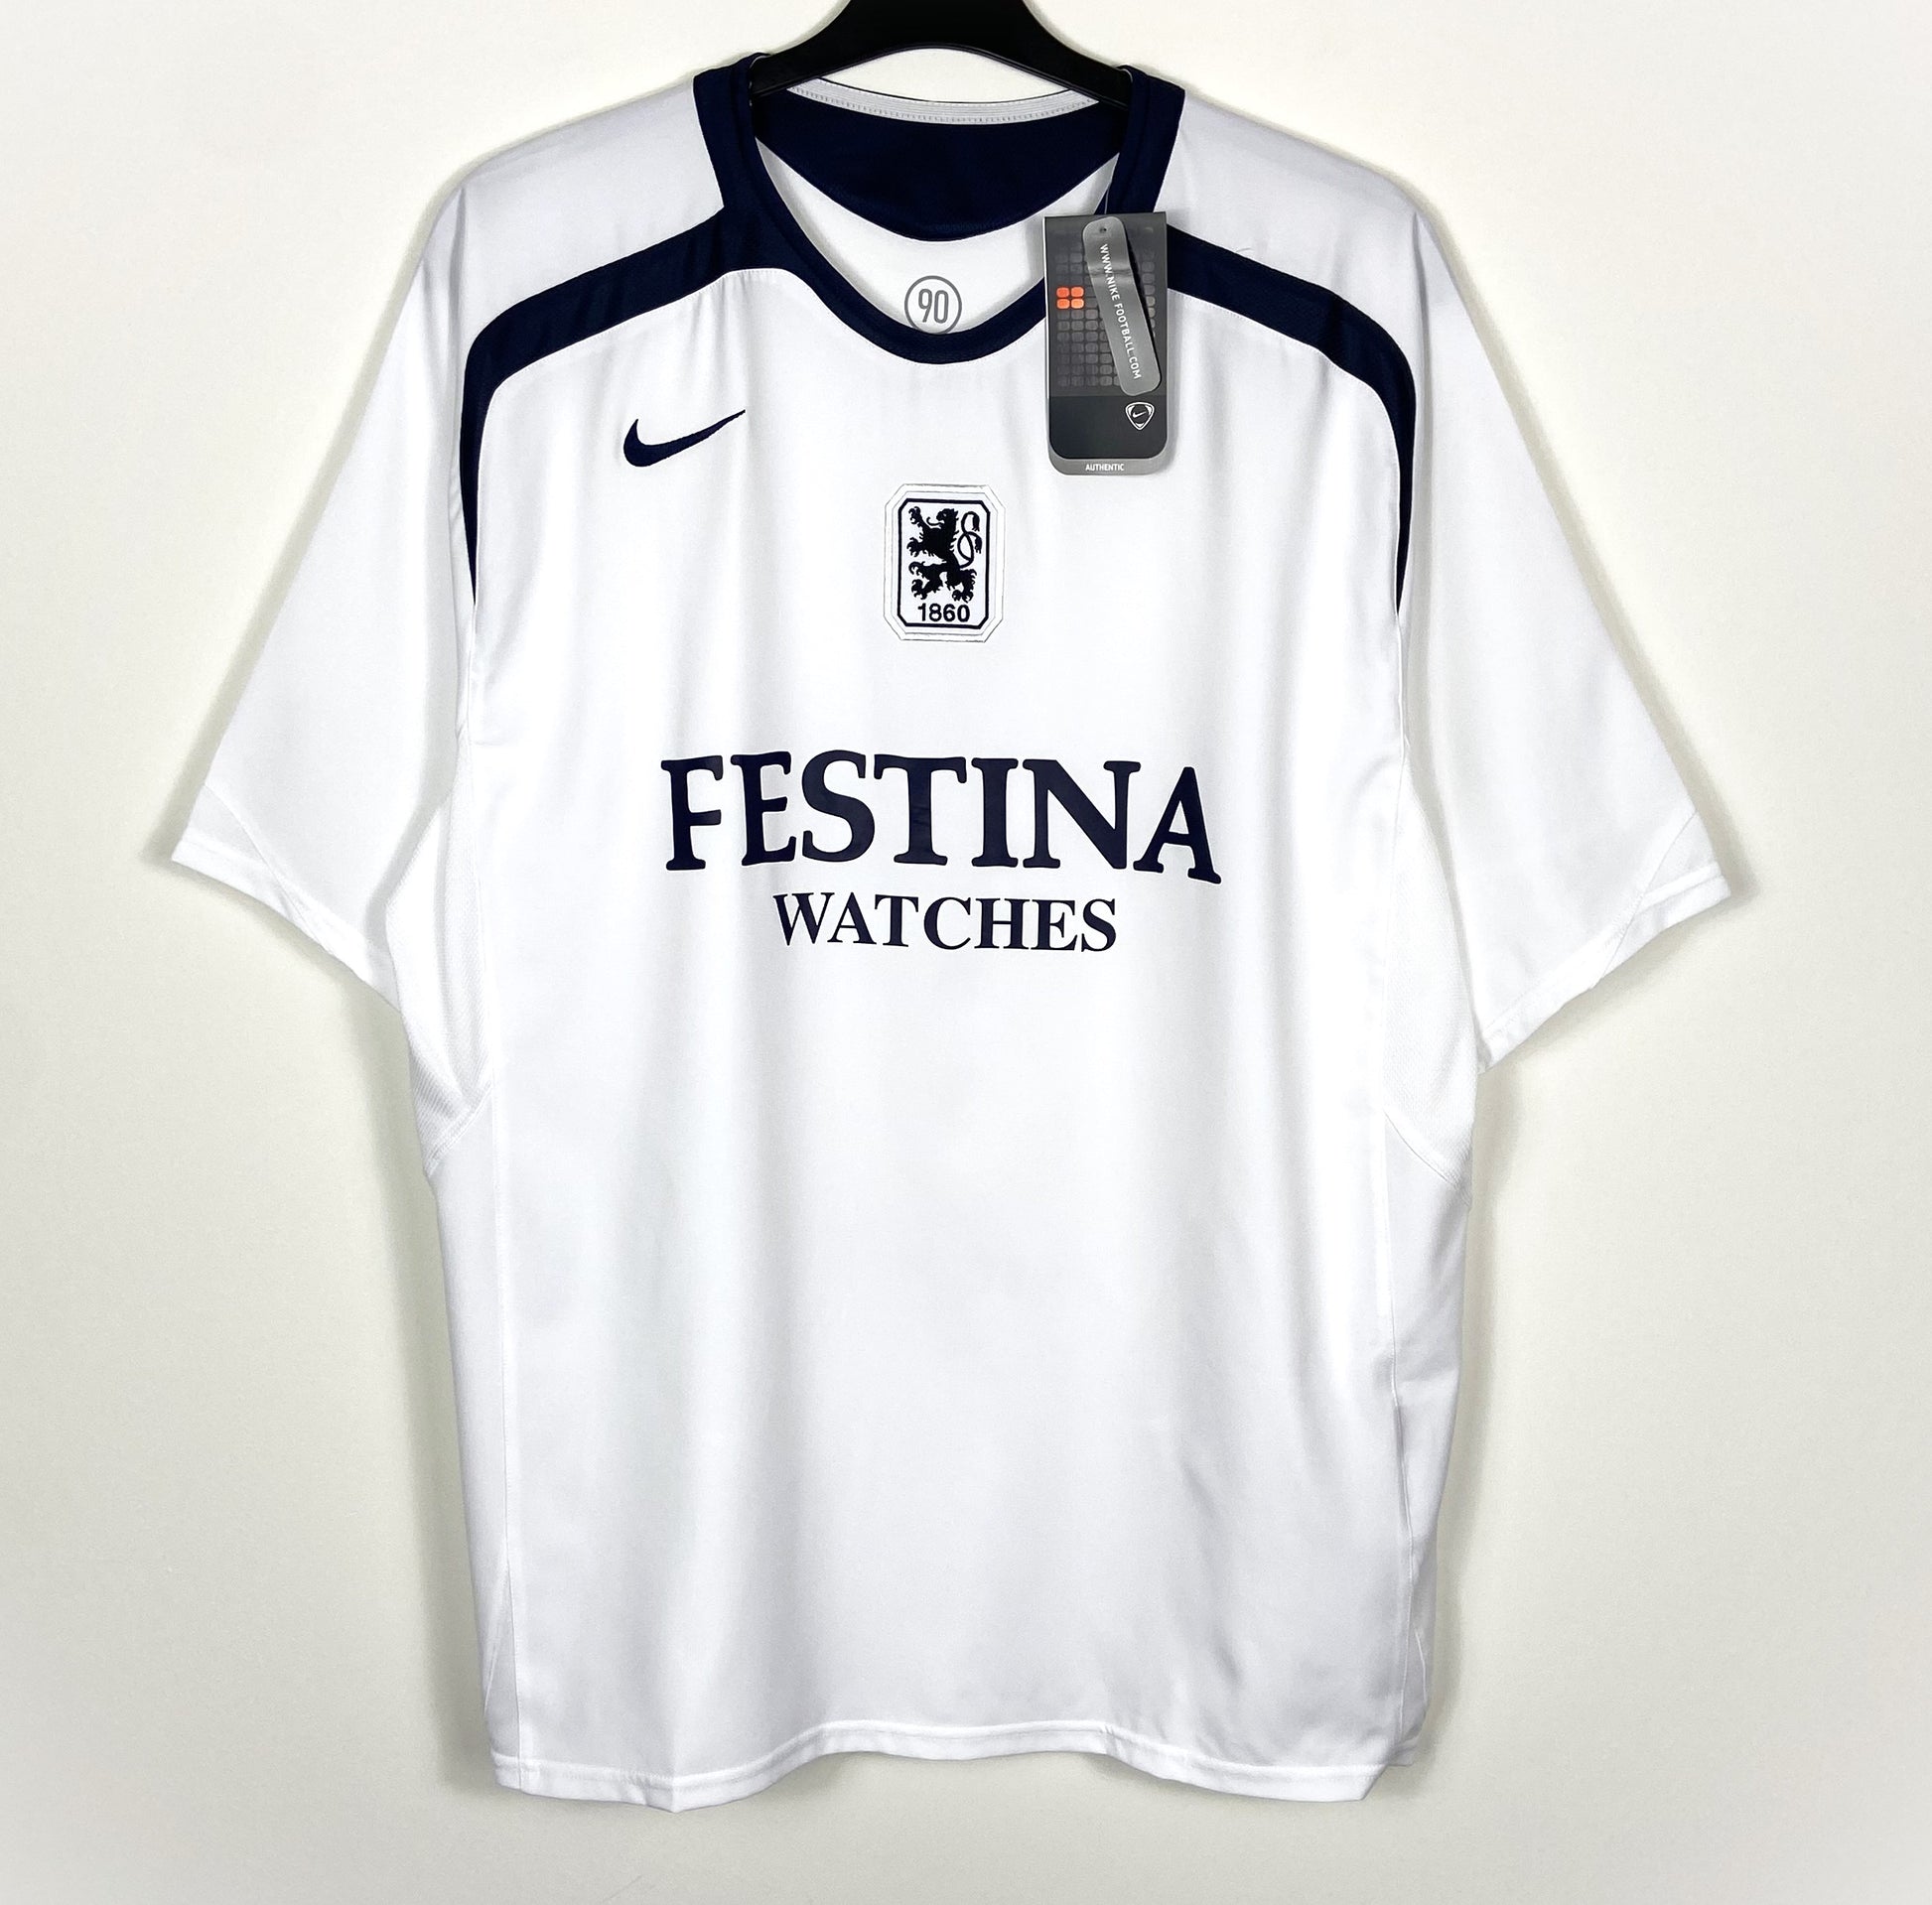 Celtic FC 2005-2006 Home Soccer Jersey Footbal Kit Nike Total 90 Size L